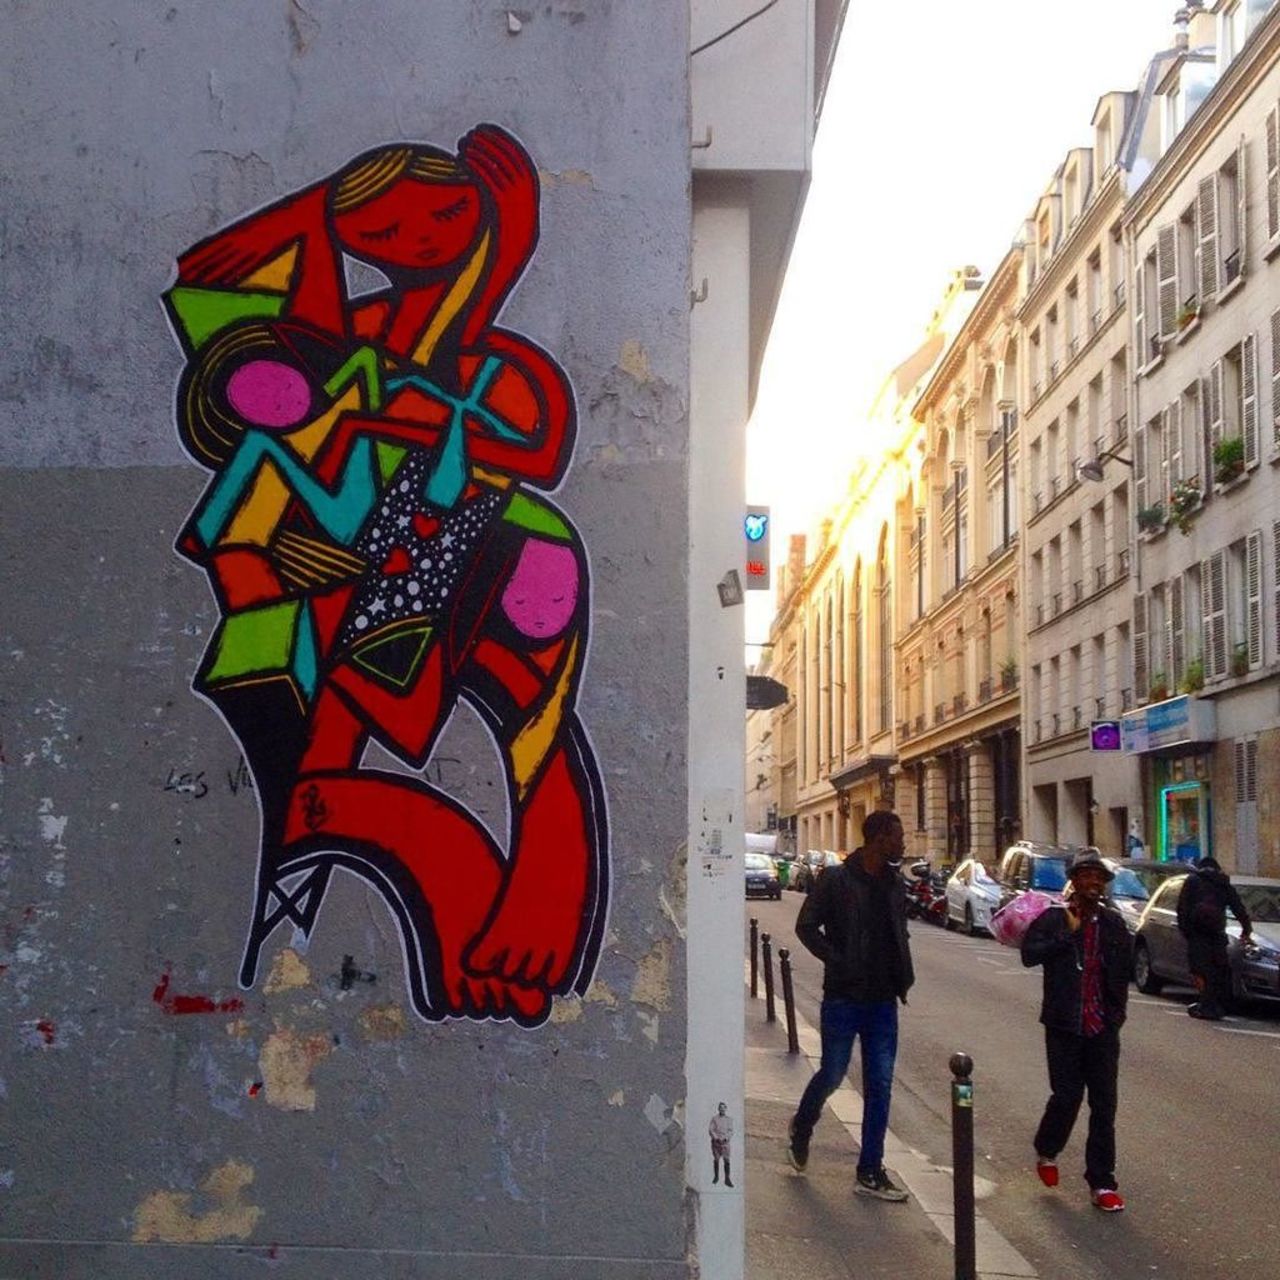 #paris #saintdenis #publicart #streetart #color #graffiti #urbanart #streetartparis by roselord https://t.co/ppOpQppqPx